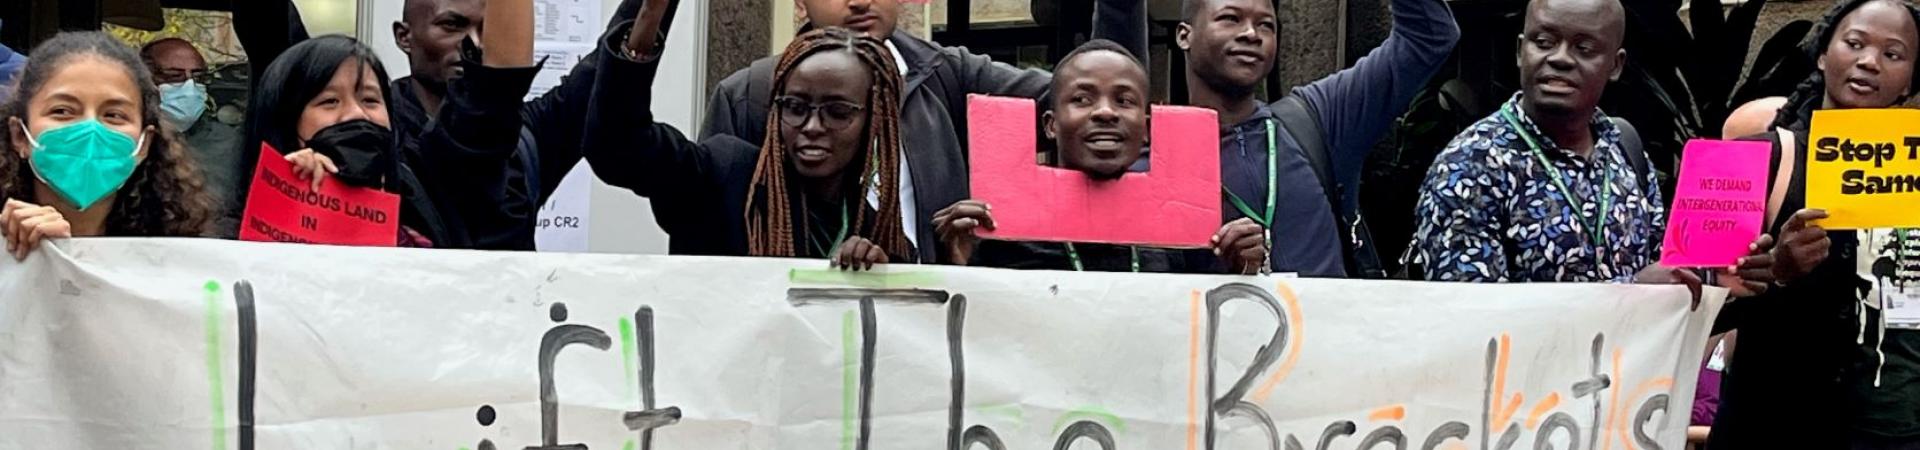 protesters in Nairobi, Kenya